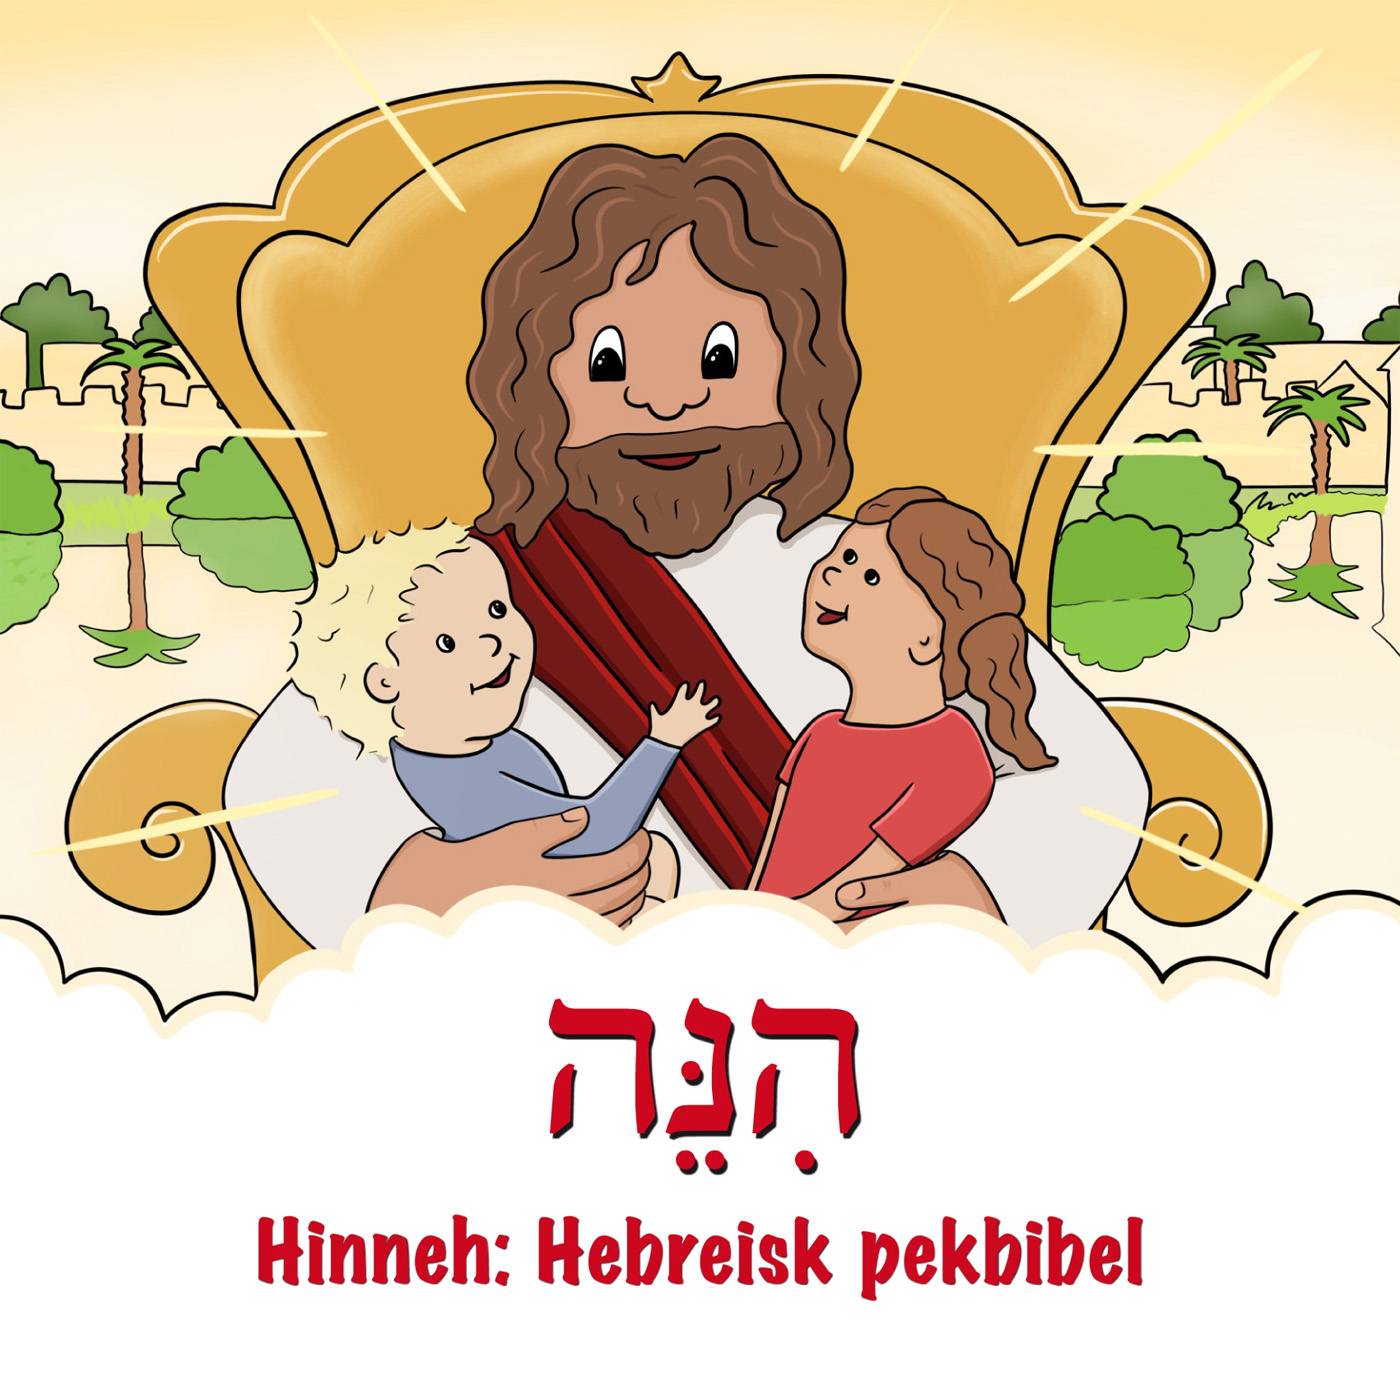 Hinneh: Hebreisk pekbibel